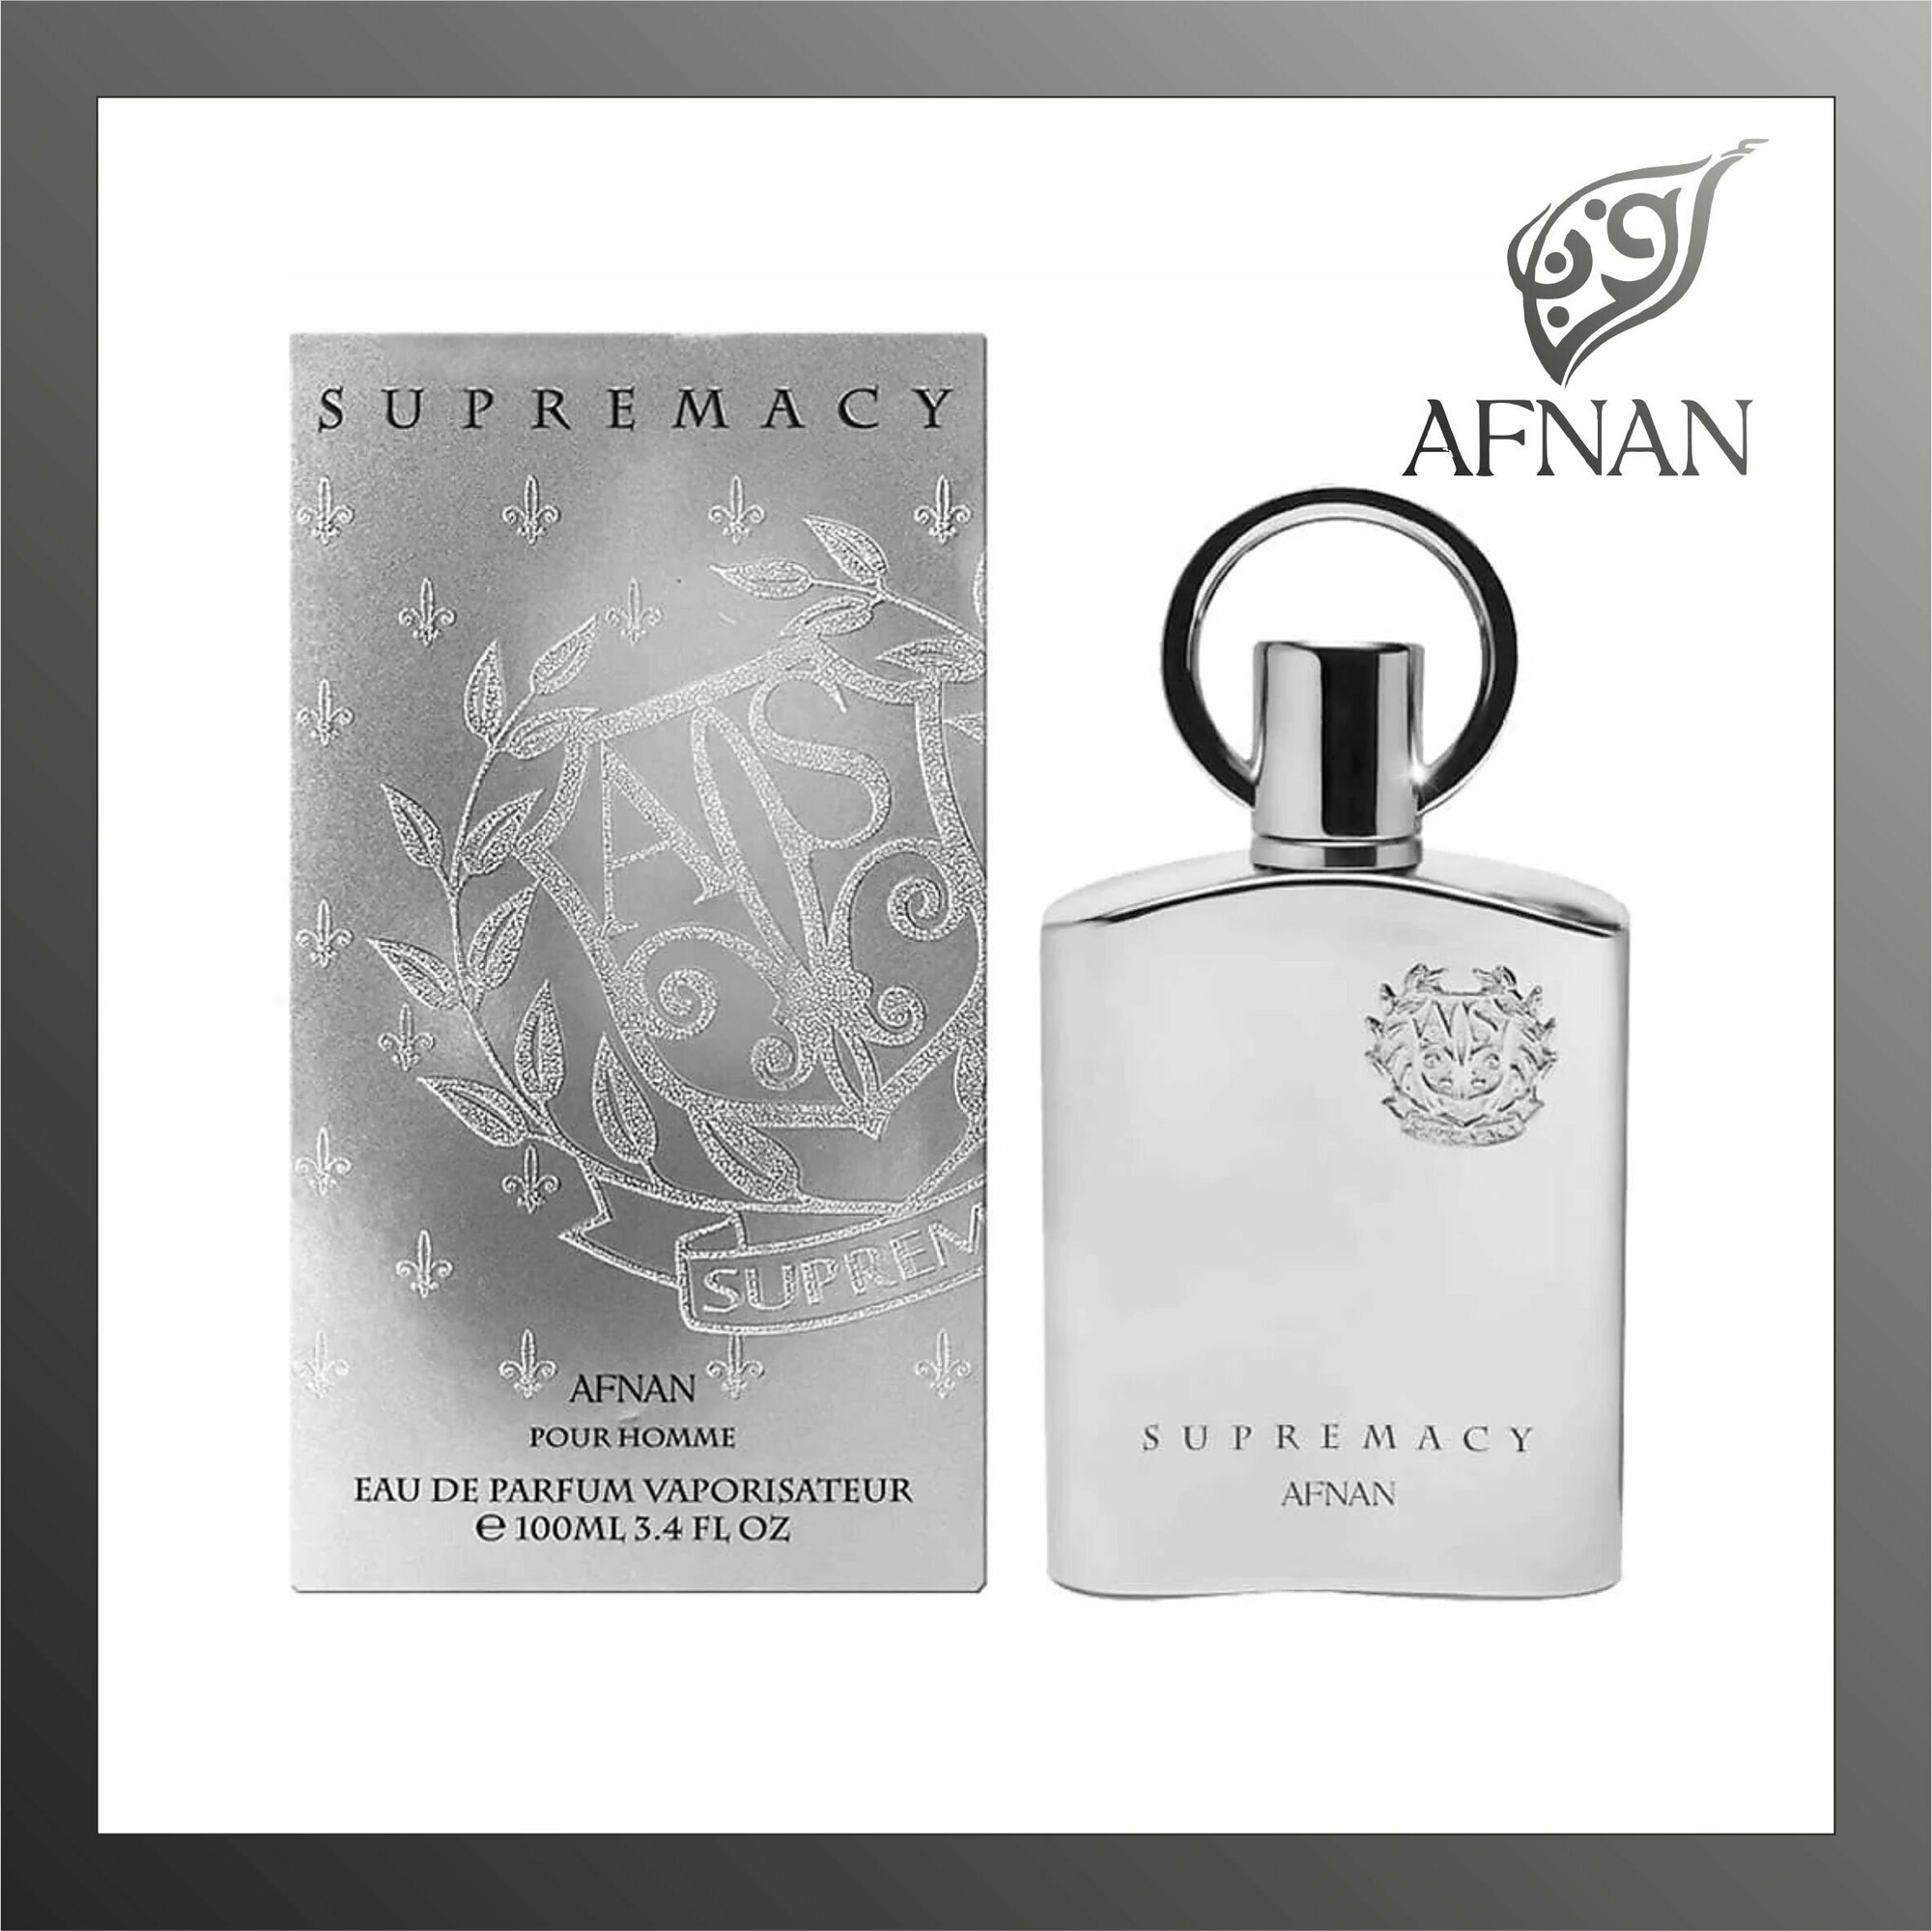 Мужской Арабский парфюм supermacy silver, Afnan, 100 мл